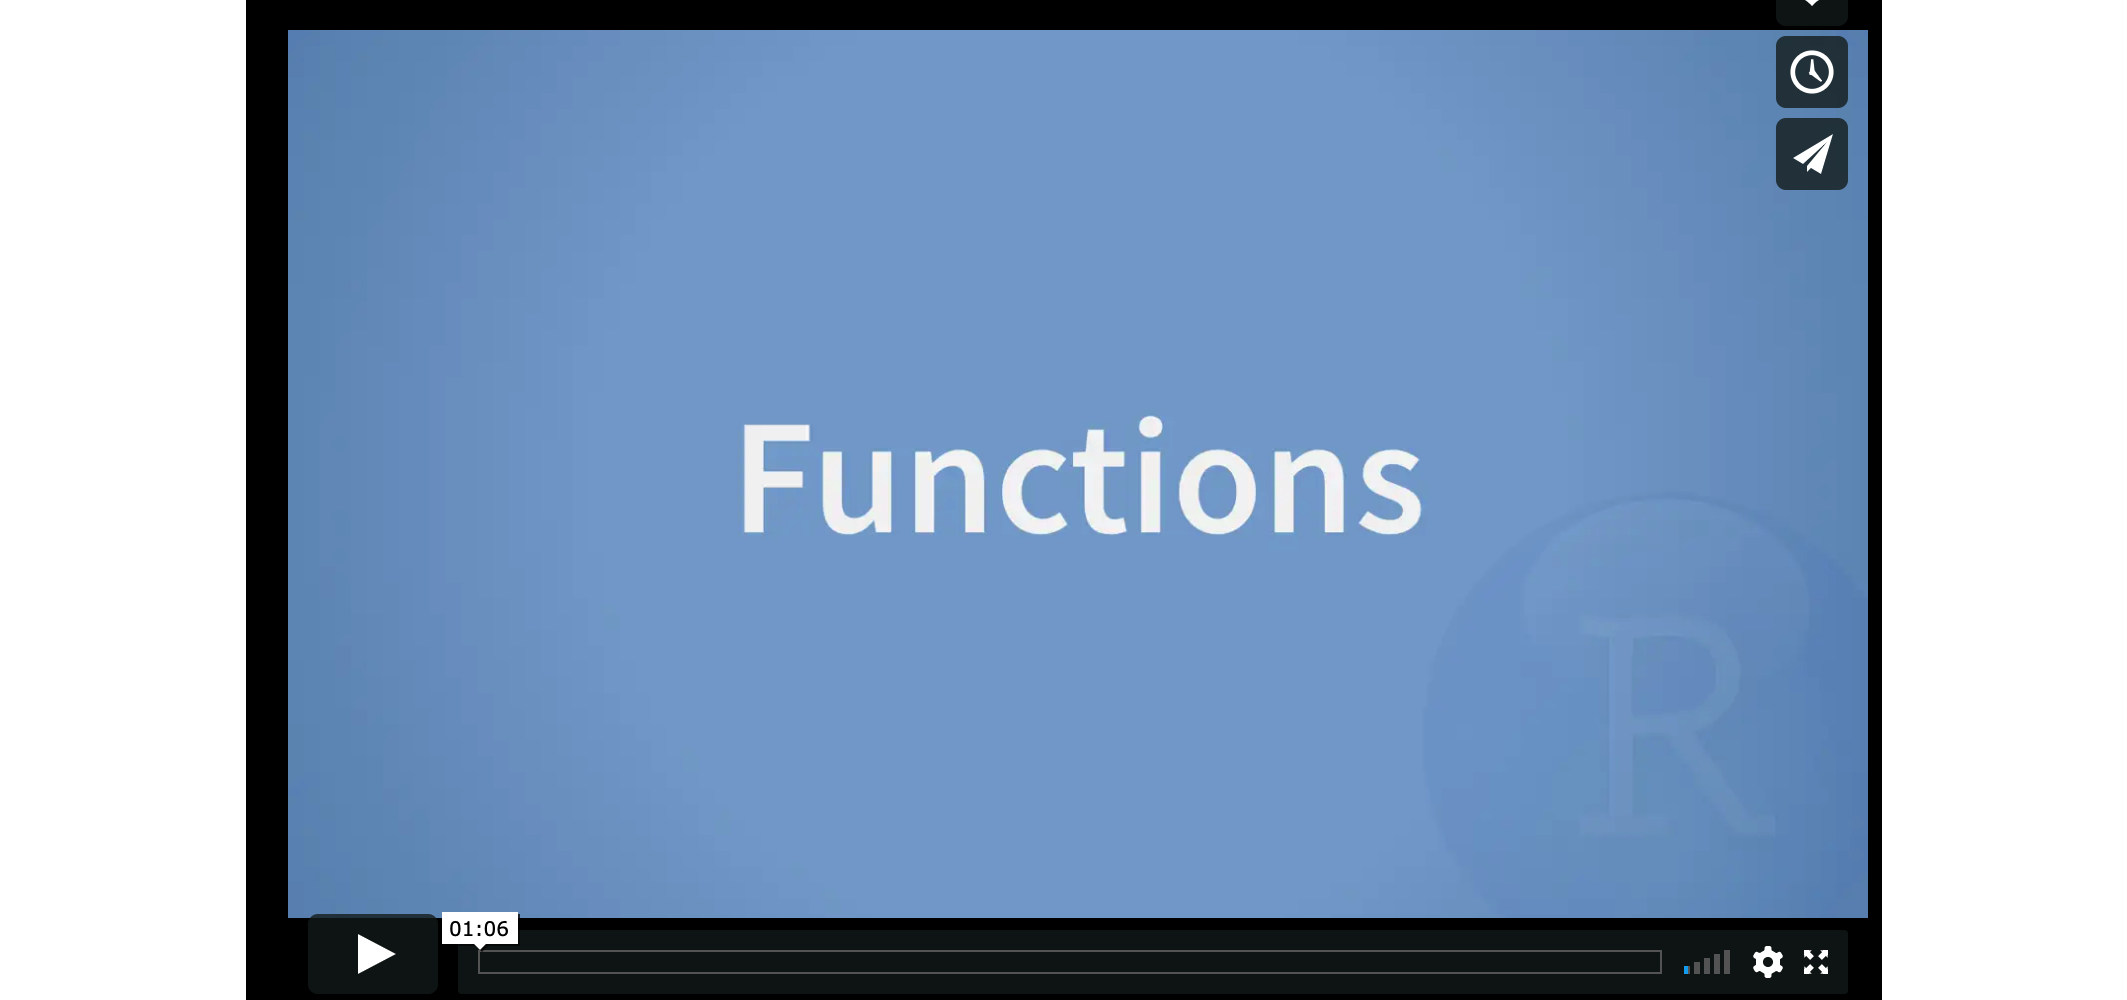 Function basics